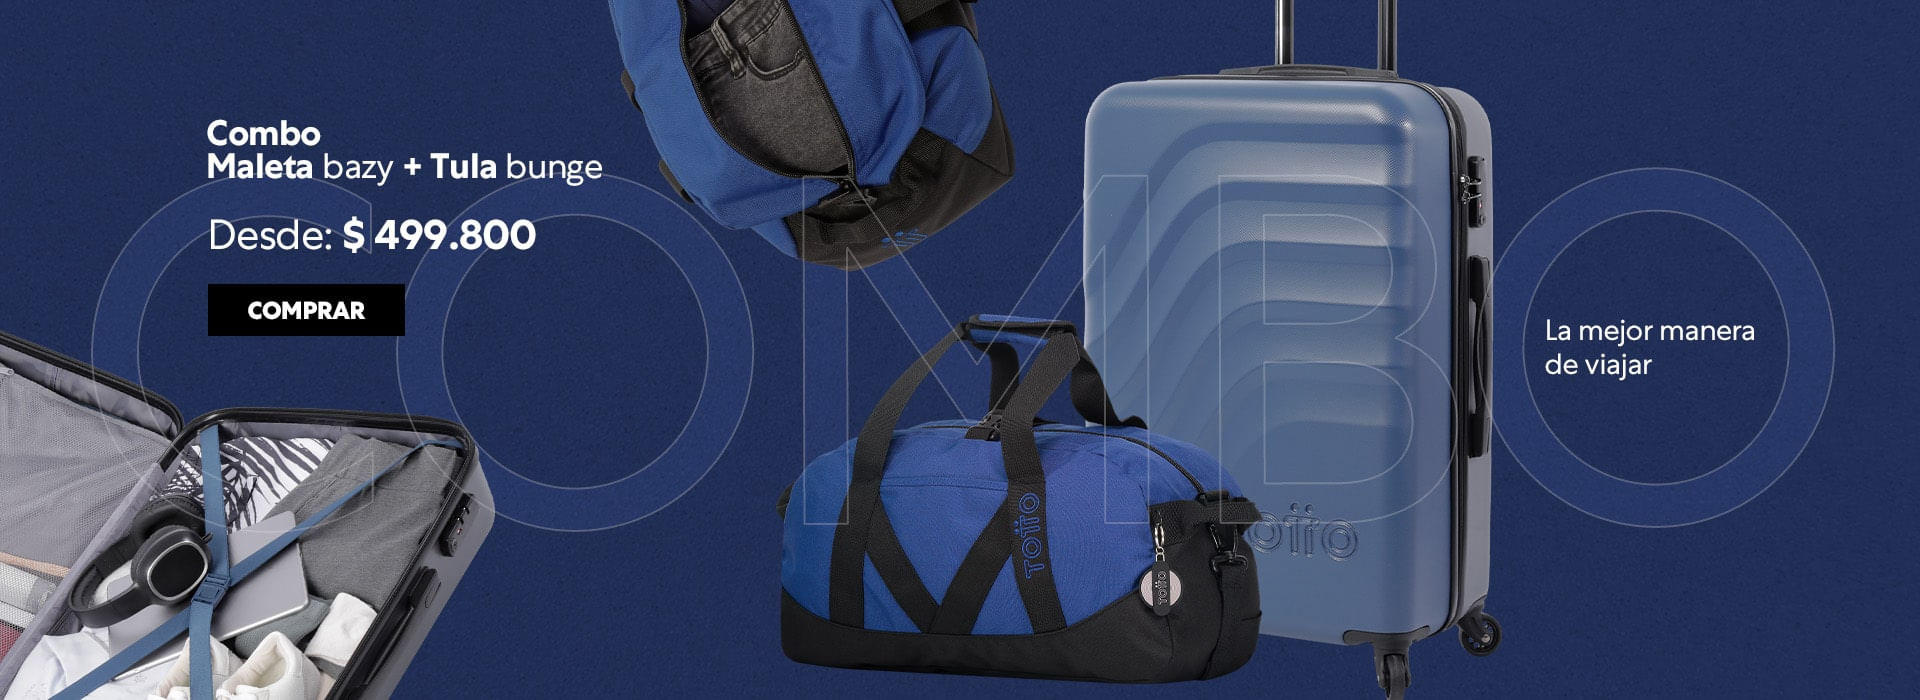 Combo maleta bazy   tula bunge, 449.900 pesos La mejor manera de viajar